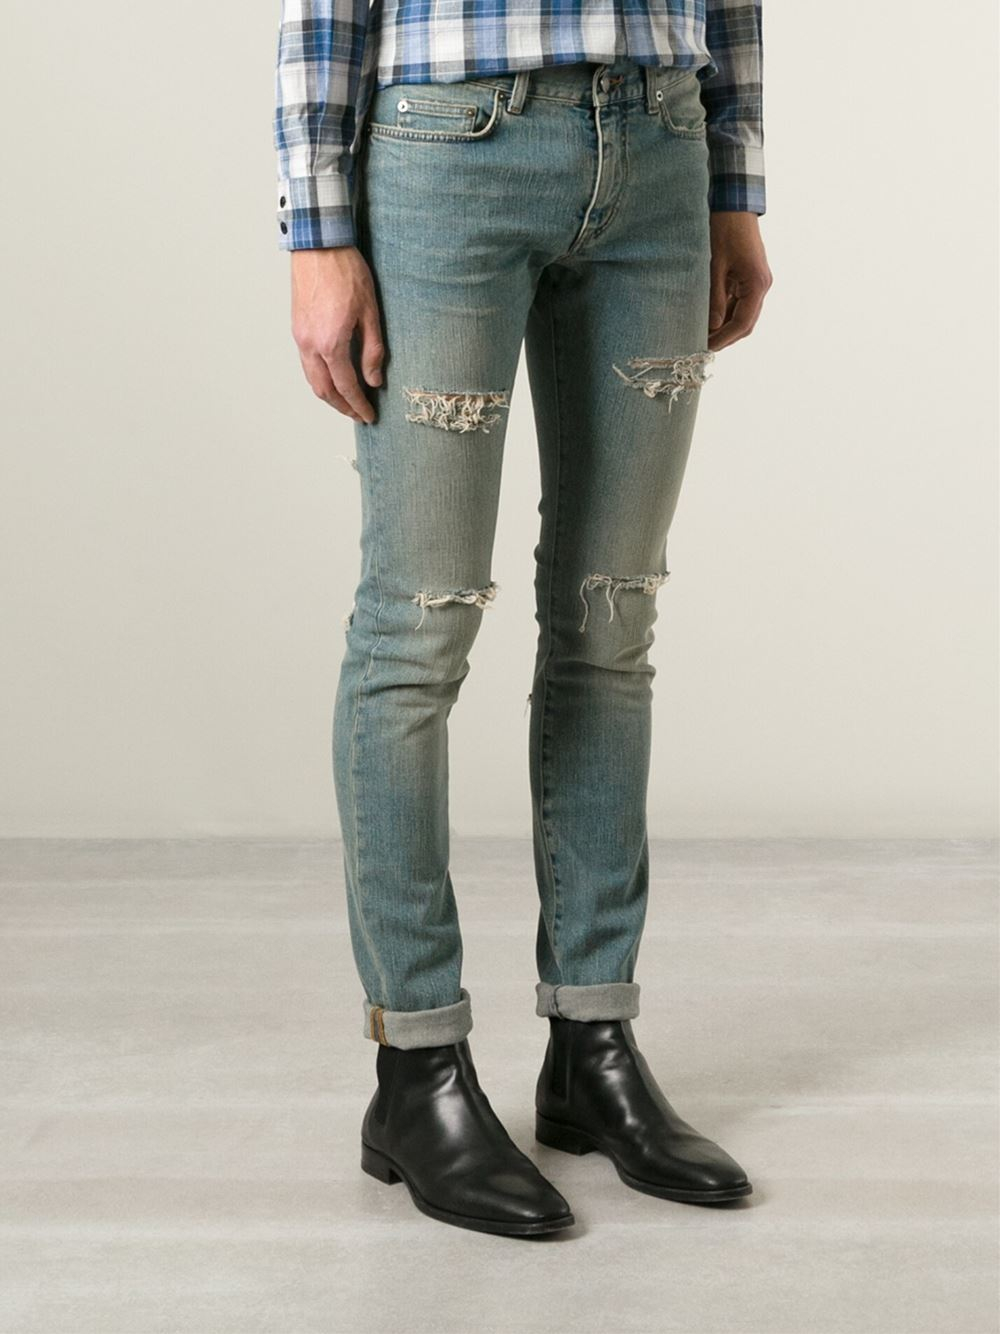 Lyst - Saint Laurent Distressed Skinny Jeans in Blue for Men